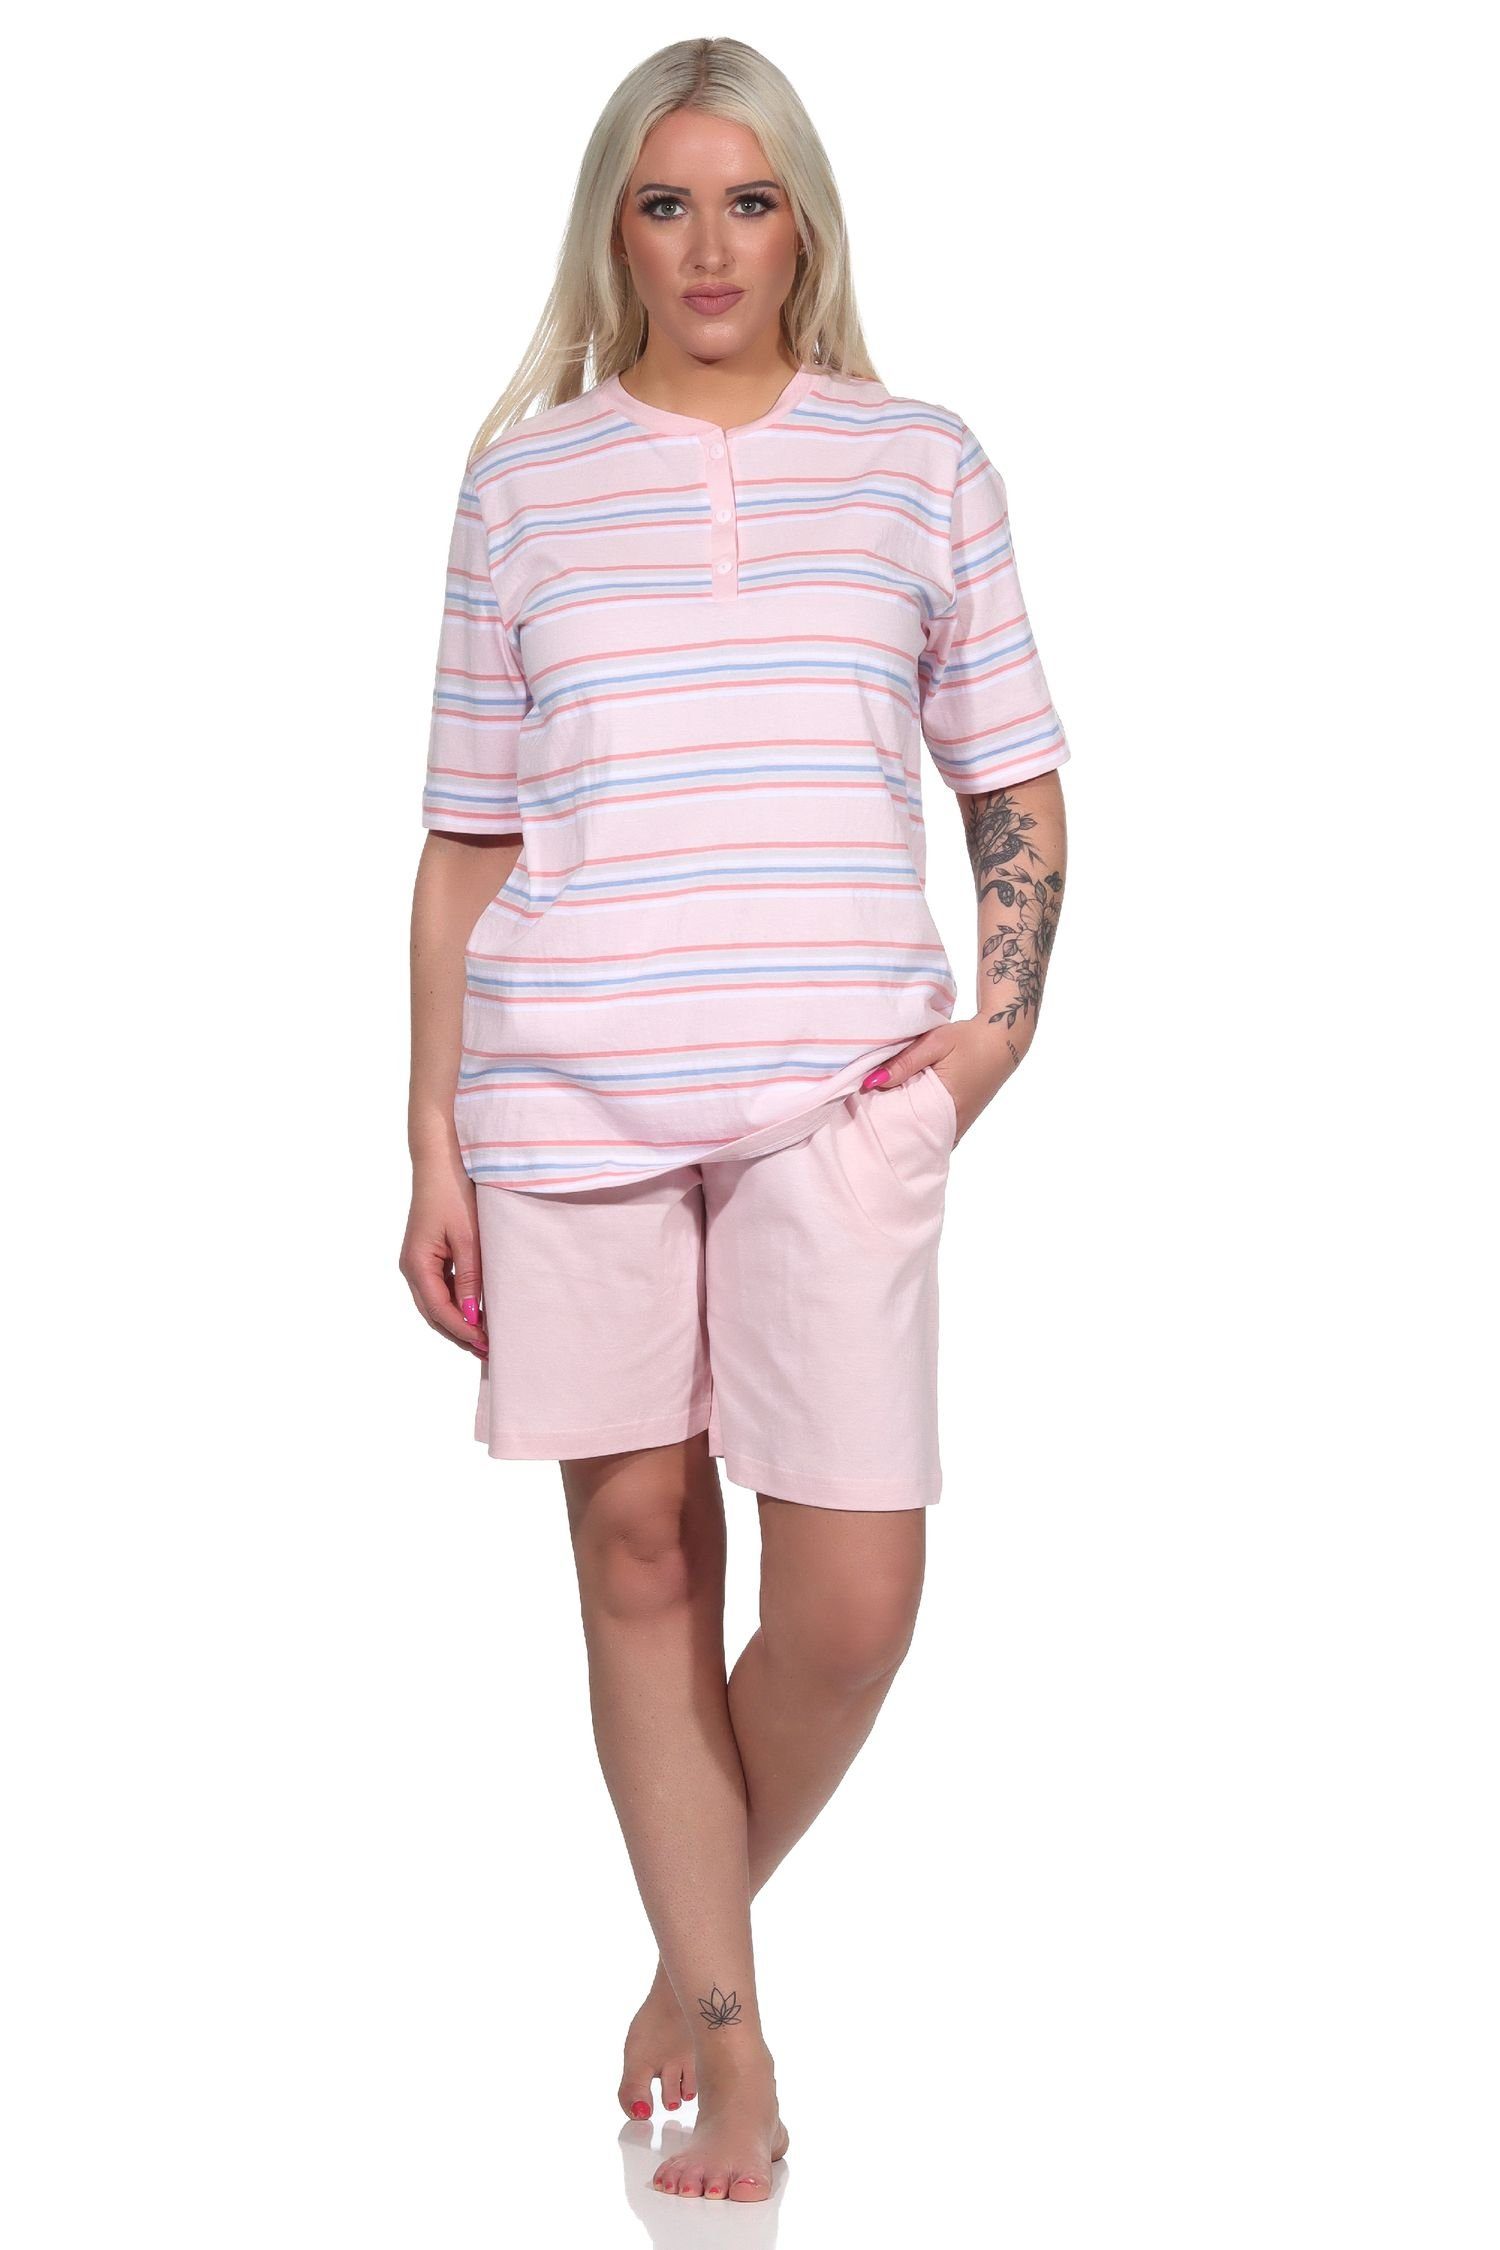 Damen in Shorty kurzarm Streifen pastellfarbenen Pyjama Normann Pyjama Schlafanzug rosa